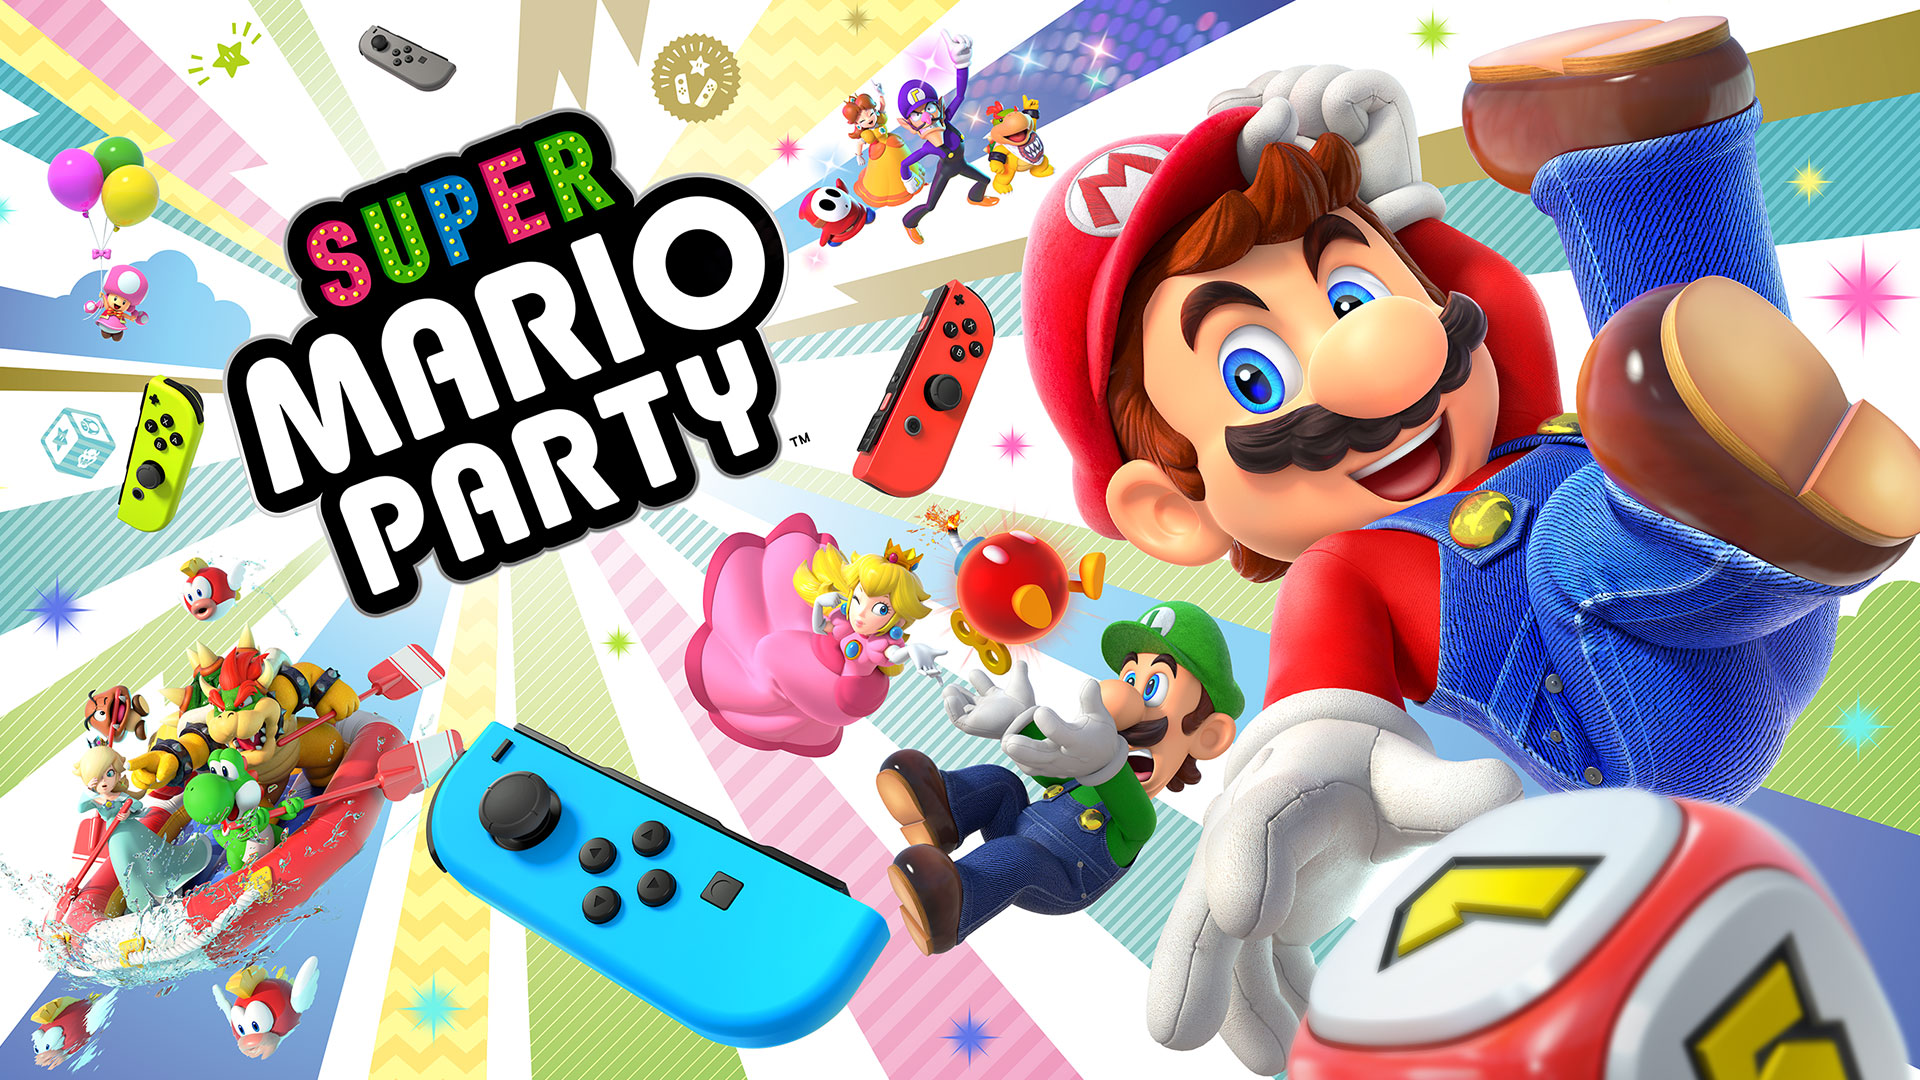 Nintendo Switch outsells Wii U, Mario Odyssey sales pass 9 million